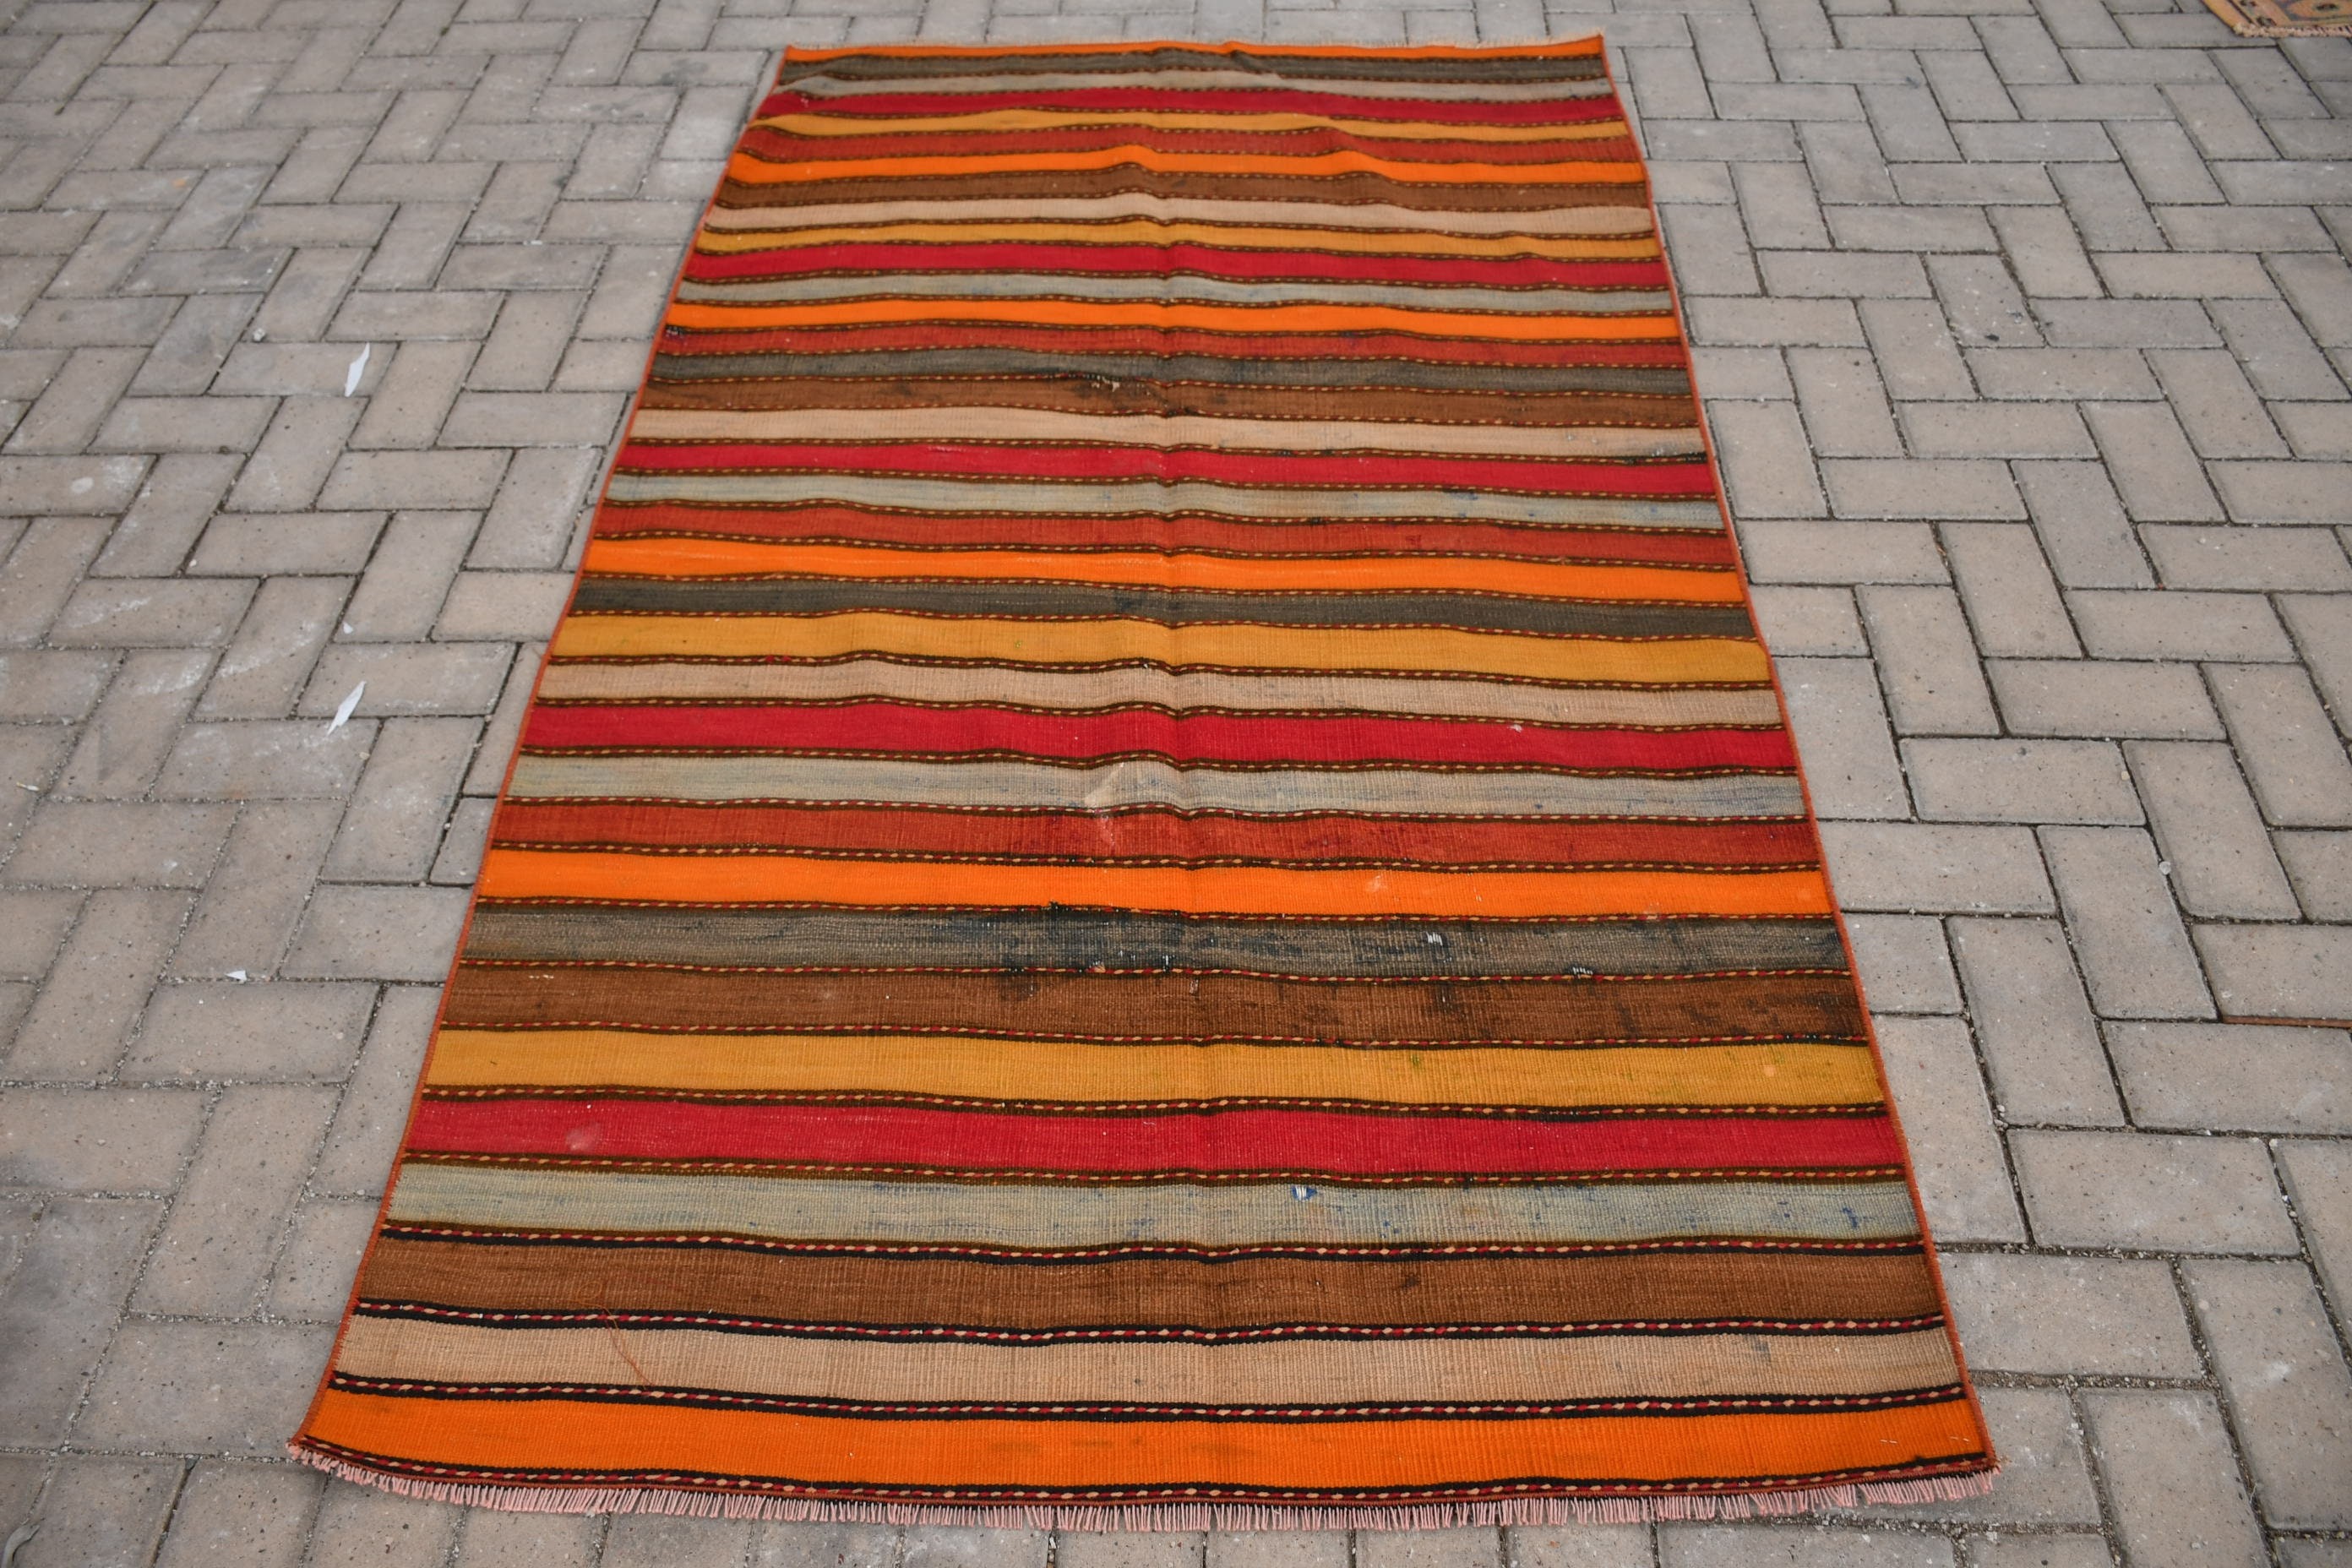 Art Rugs, Oushak Rugs, Vintage Rug, Kilim, Moroccan Rug, Turkish Rug, Orange Antique Rug, Dining Room Rug, 3.8x6.6 ft Area Rug, Bedroom Rug